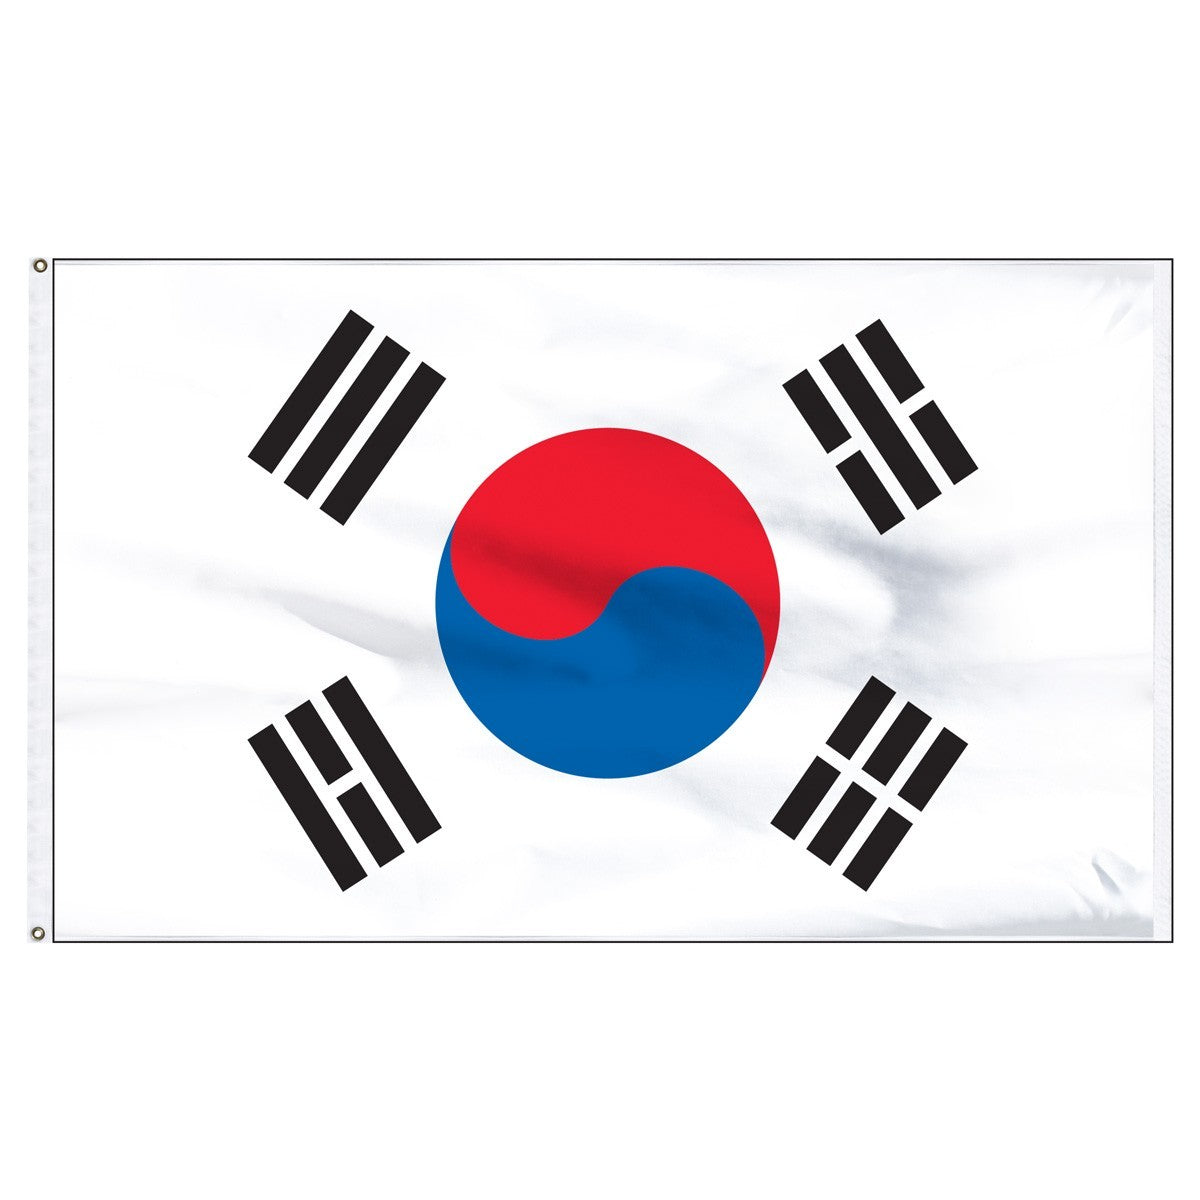 South Korea 5' x 8' Outdoor Nylon Flag